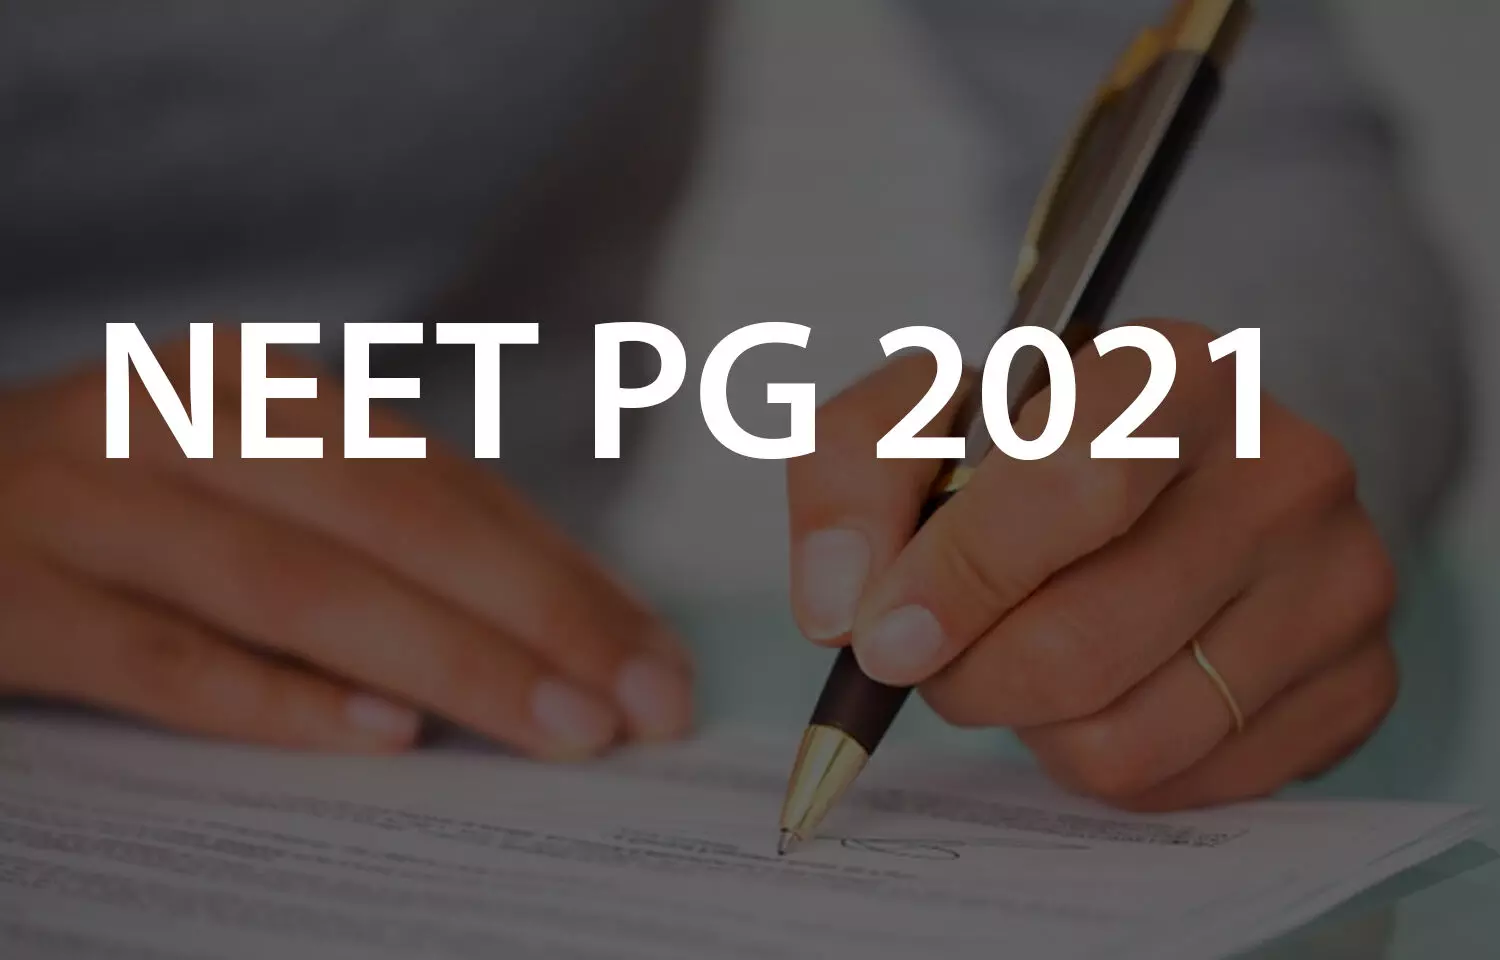 NEET PG 2021: Understand the new exam pattern